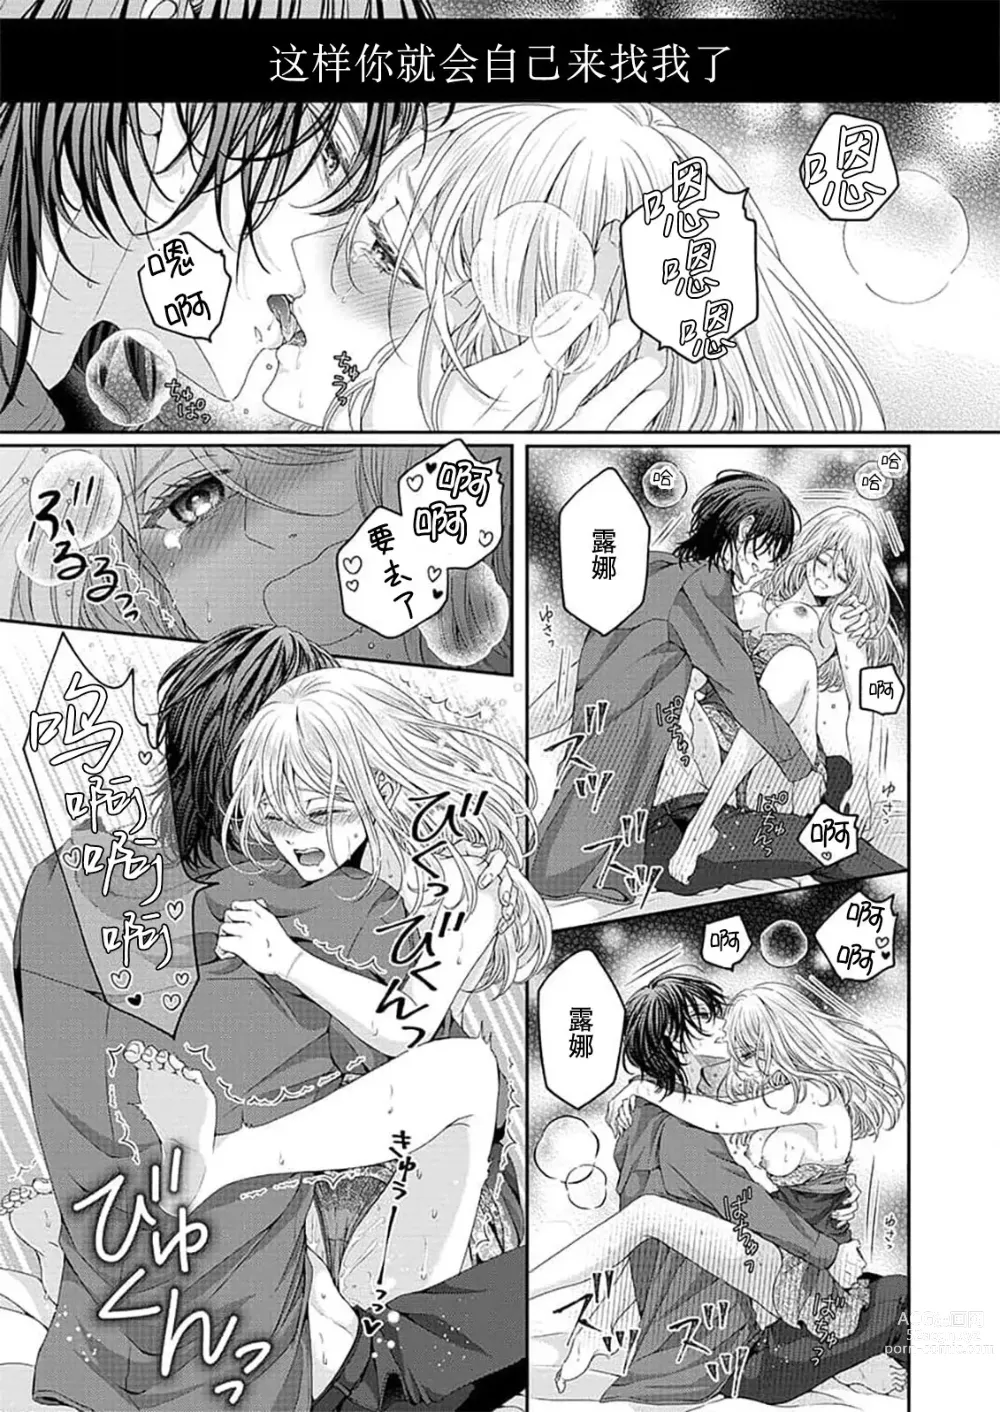 Page 25 of manga 然后你会自投罗网~冷酷王子甜蜜狡猾的陷阱